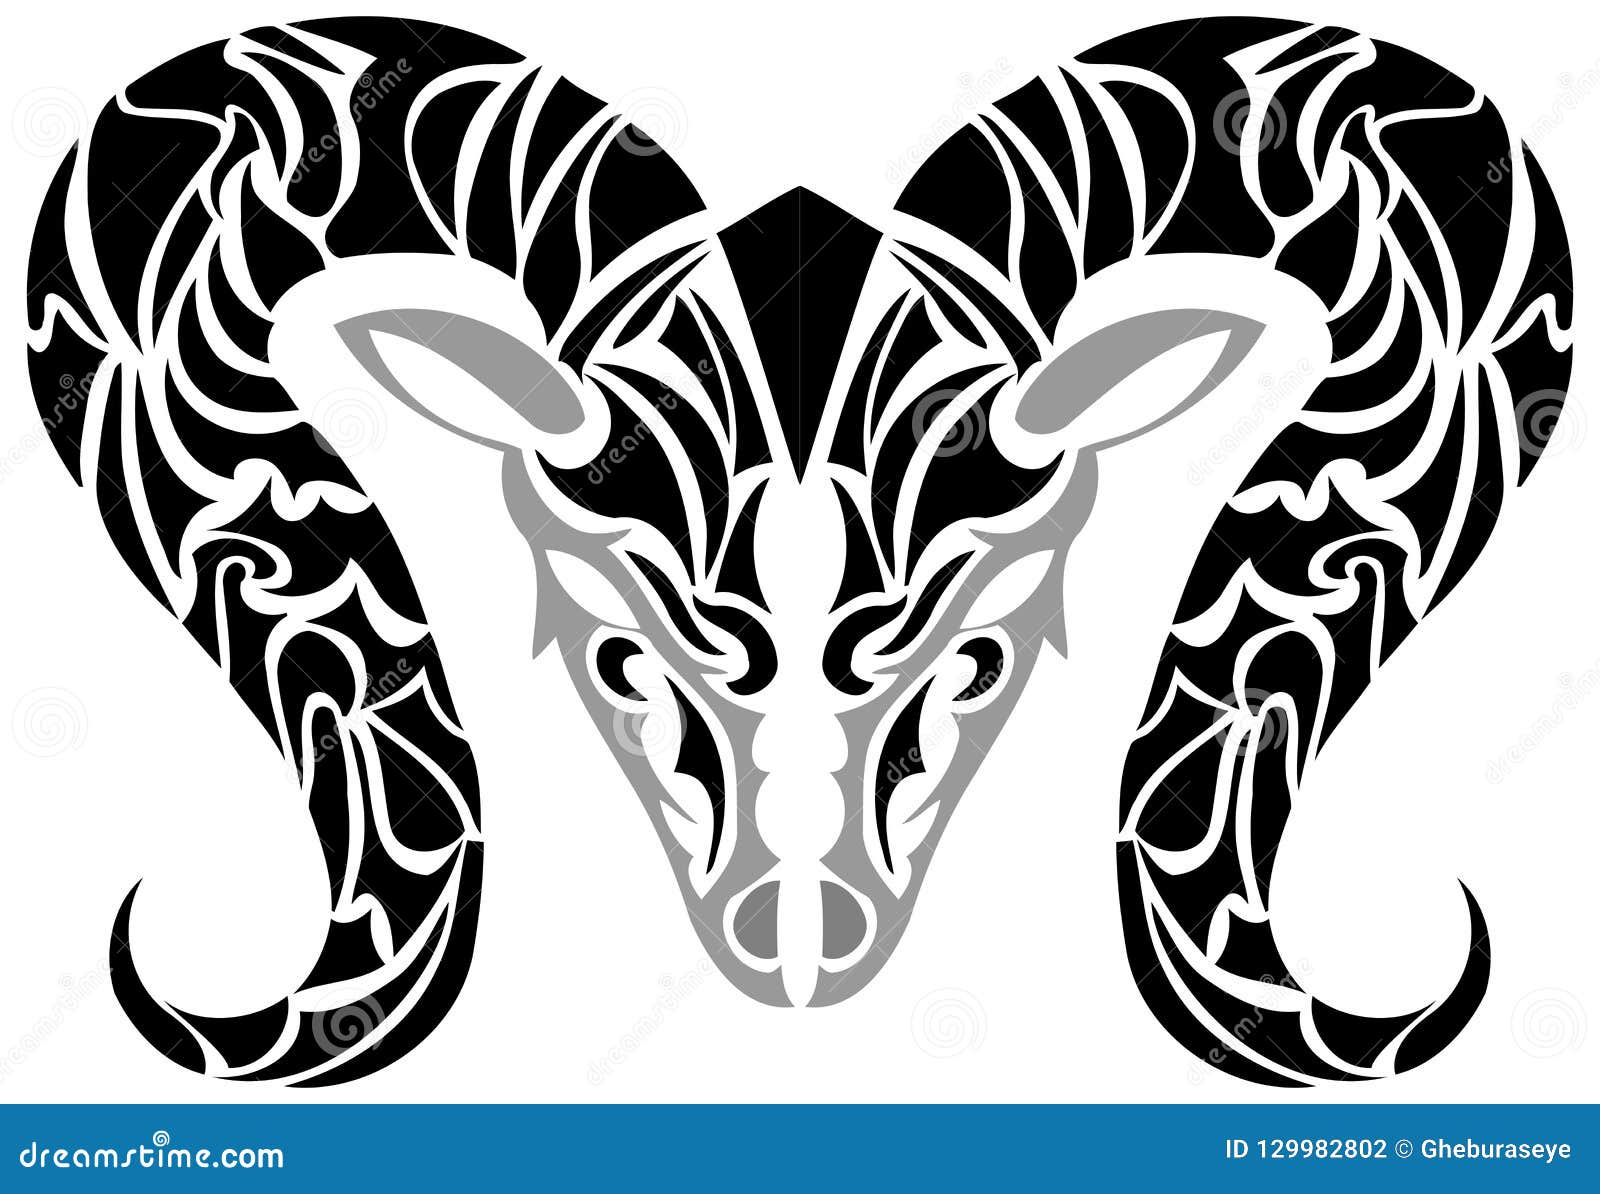 30 Drawing Of A Tribal Ram Tattoo Illustrations RoyaltyFree Vector  Graphics  Clip Art  iStock